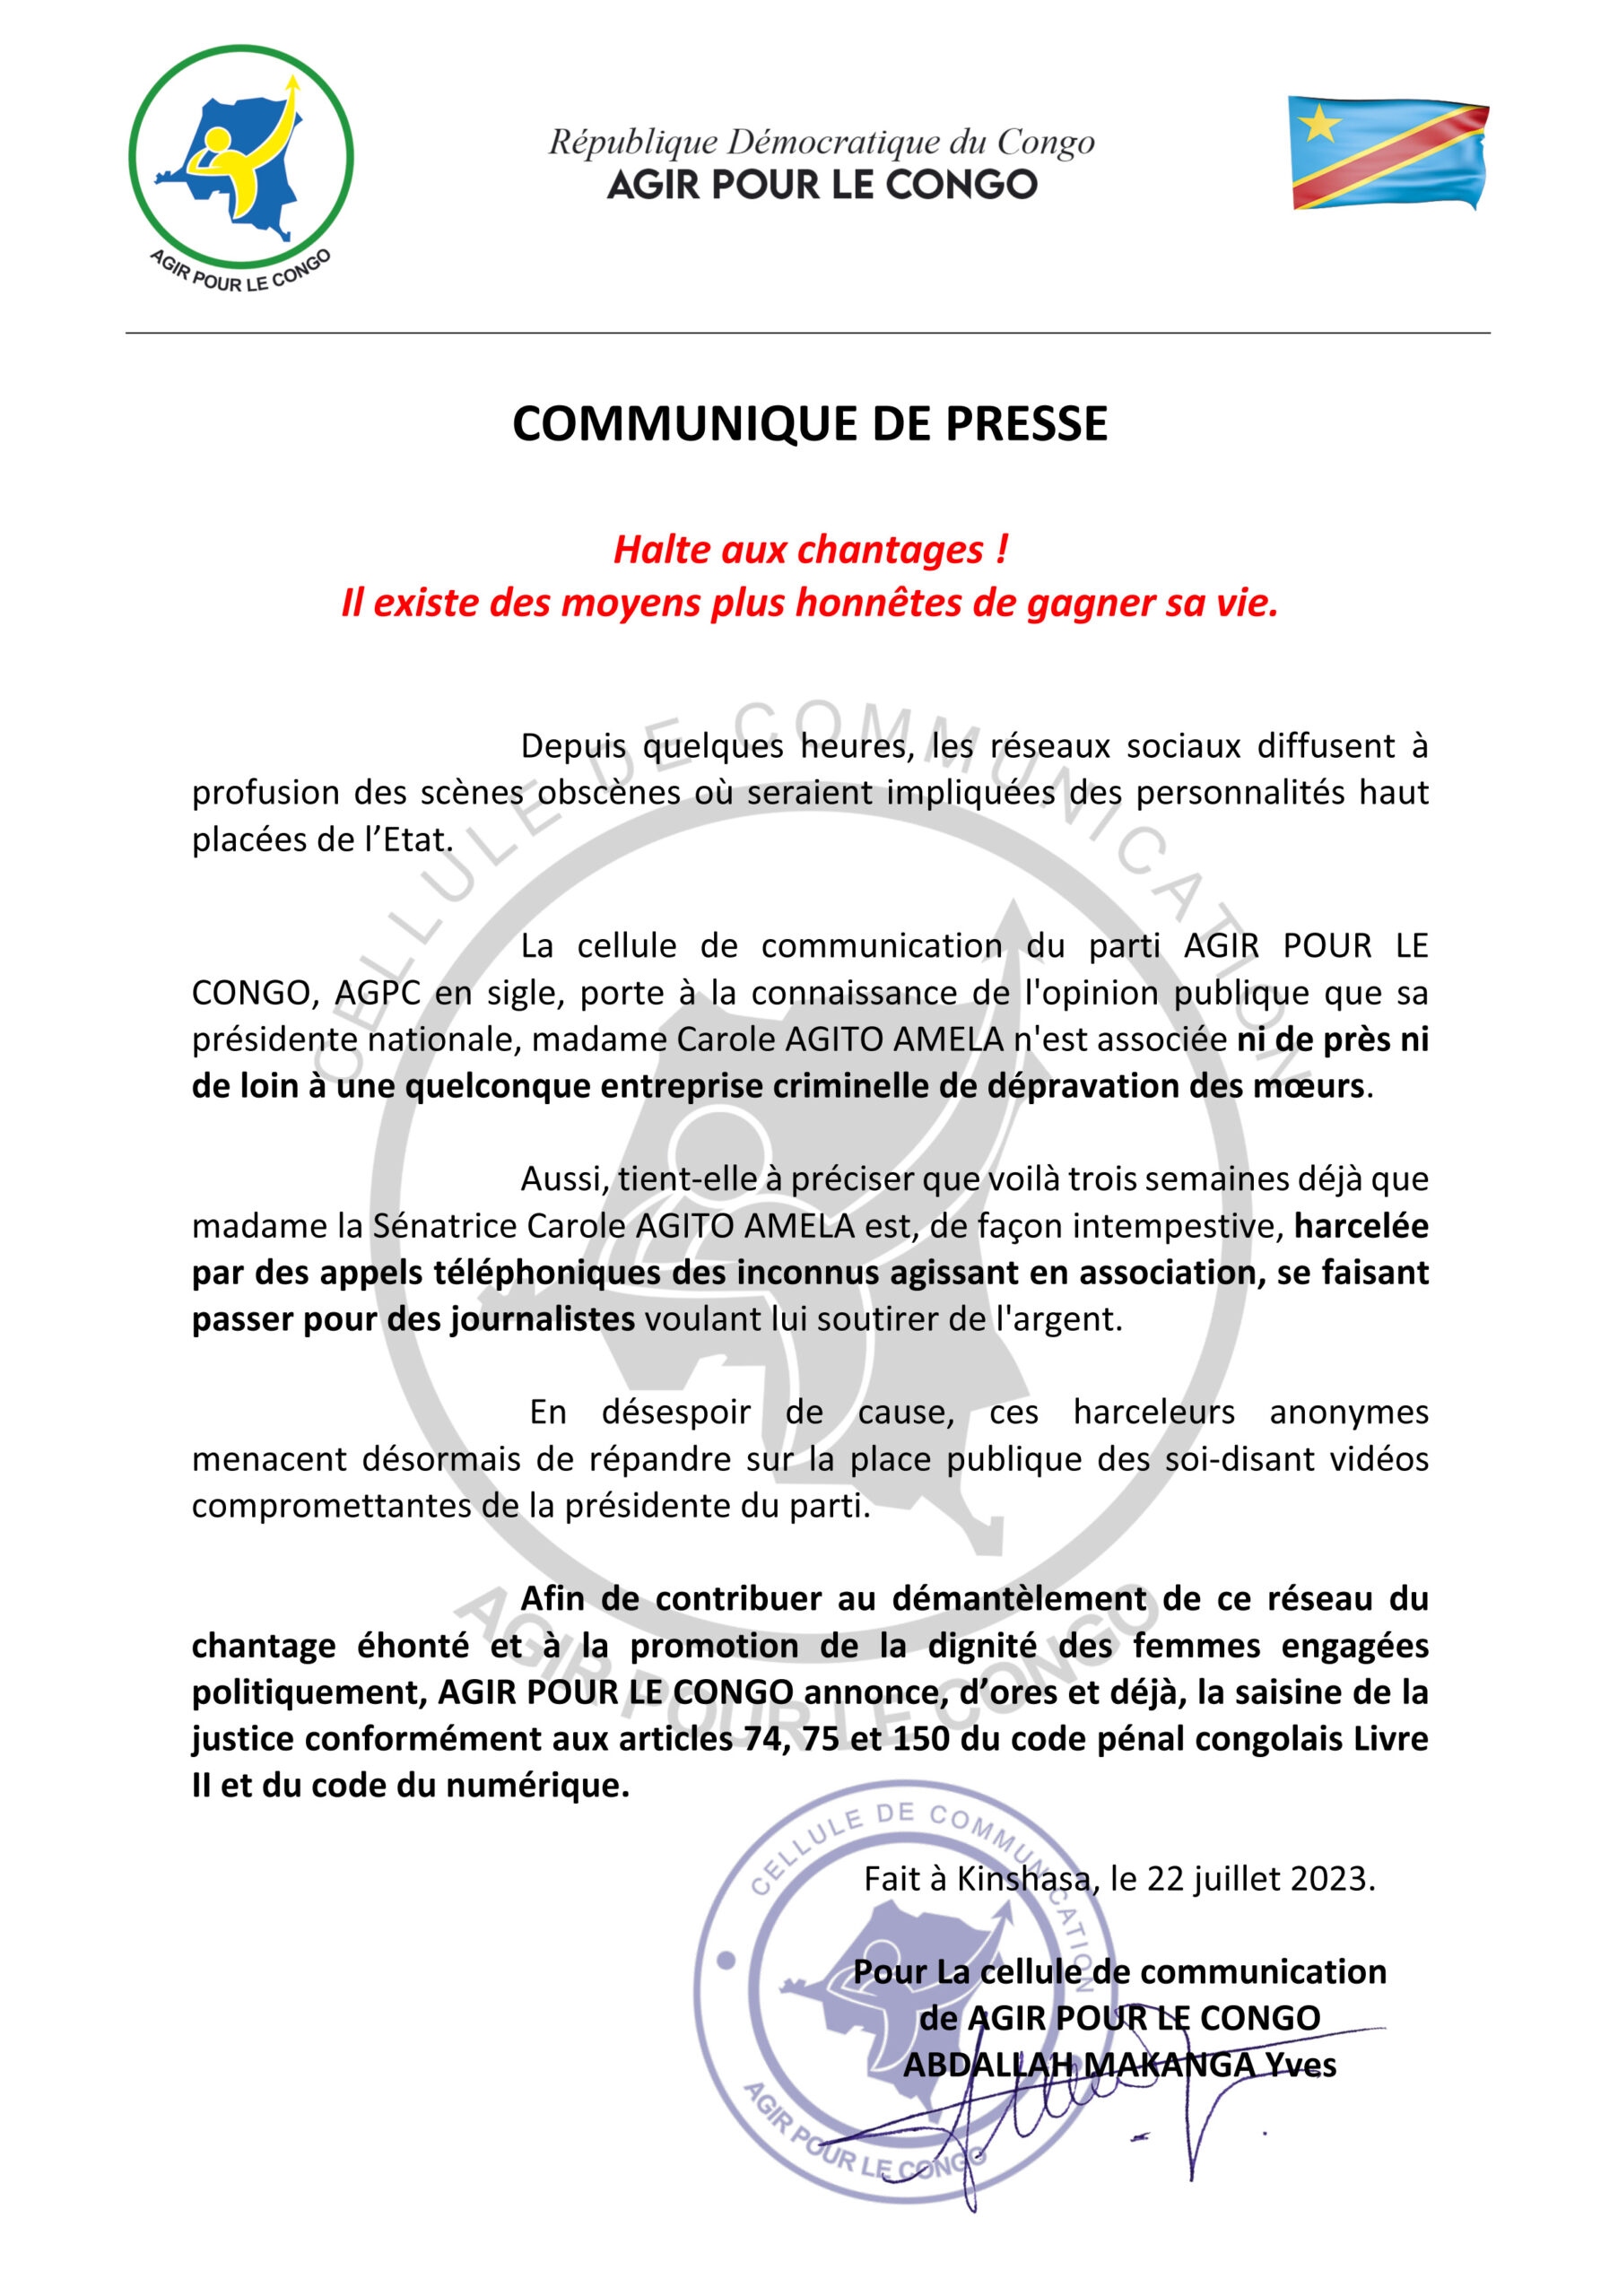 COMMUNIQUE DE PRESSE AGPC scaled